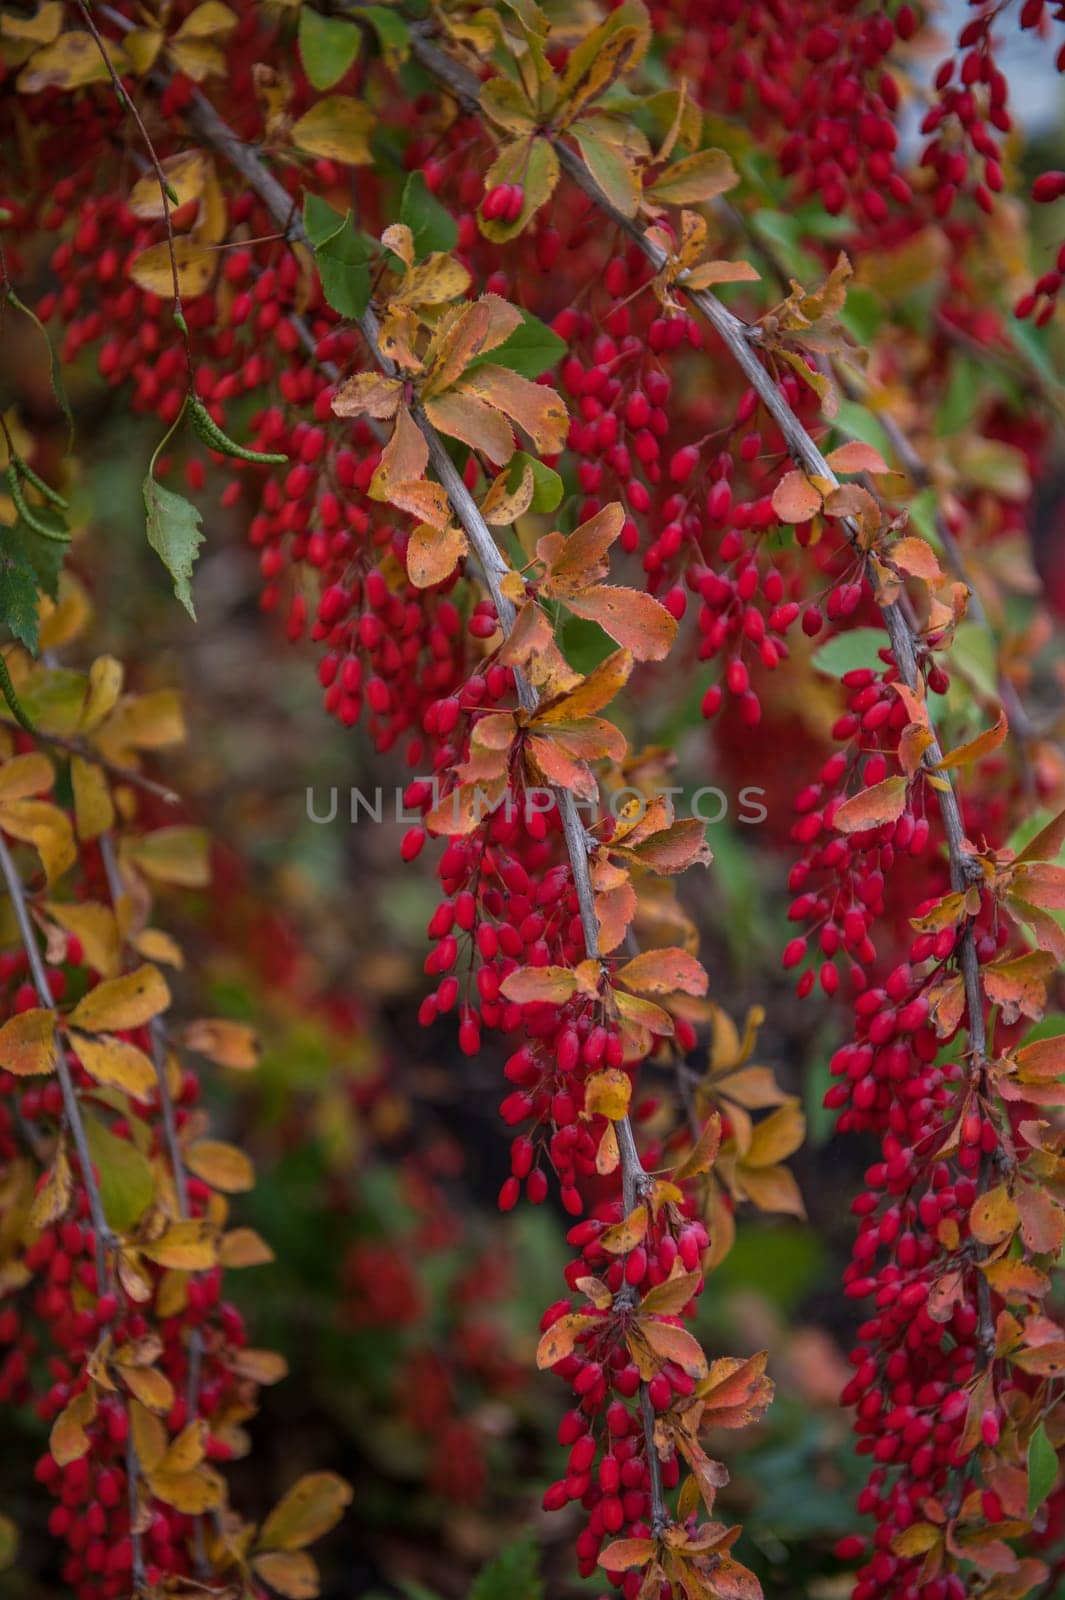 Red Berberis vulgaris berries on branch in autumn garden, by rusak